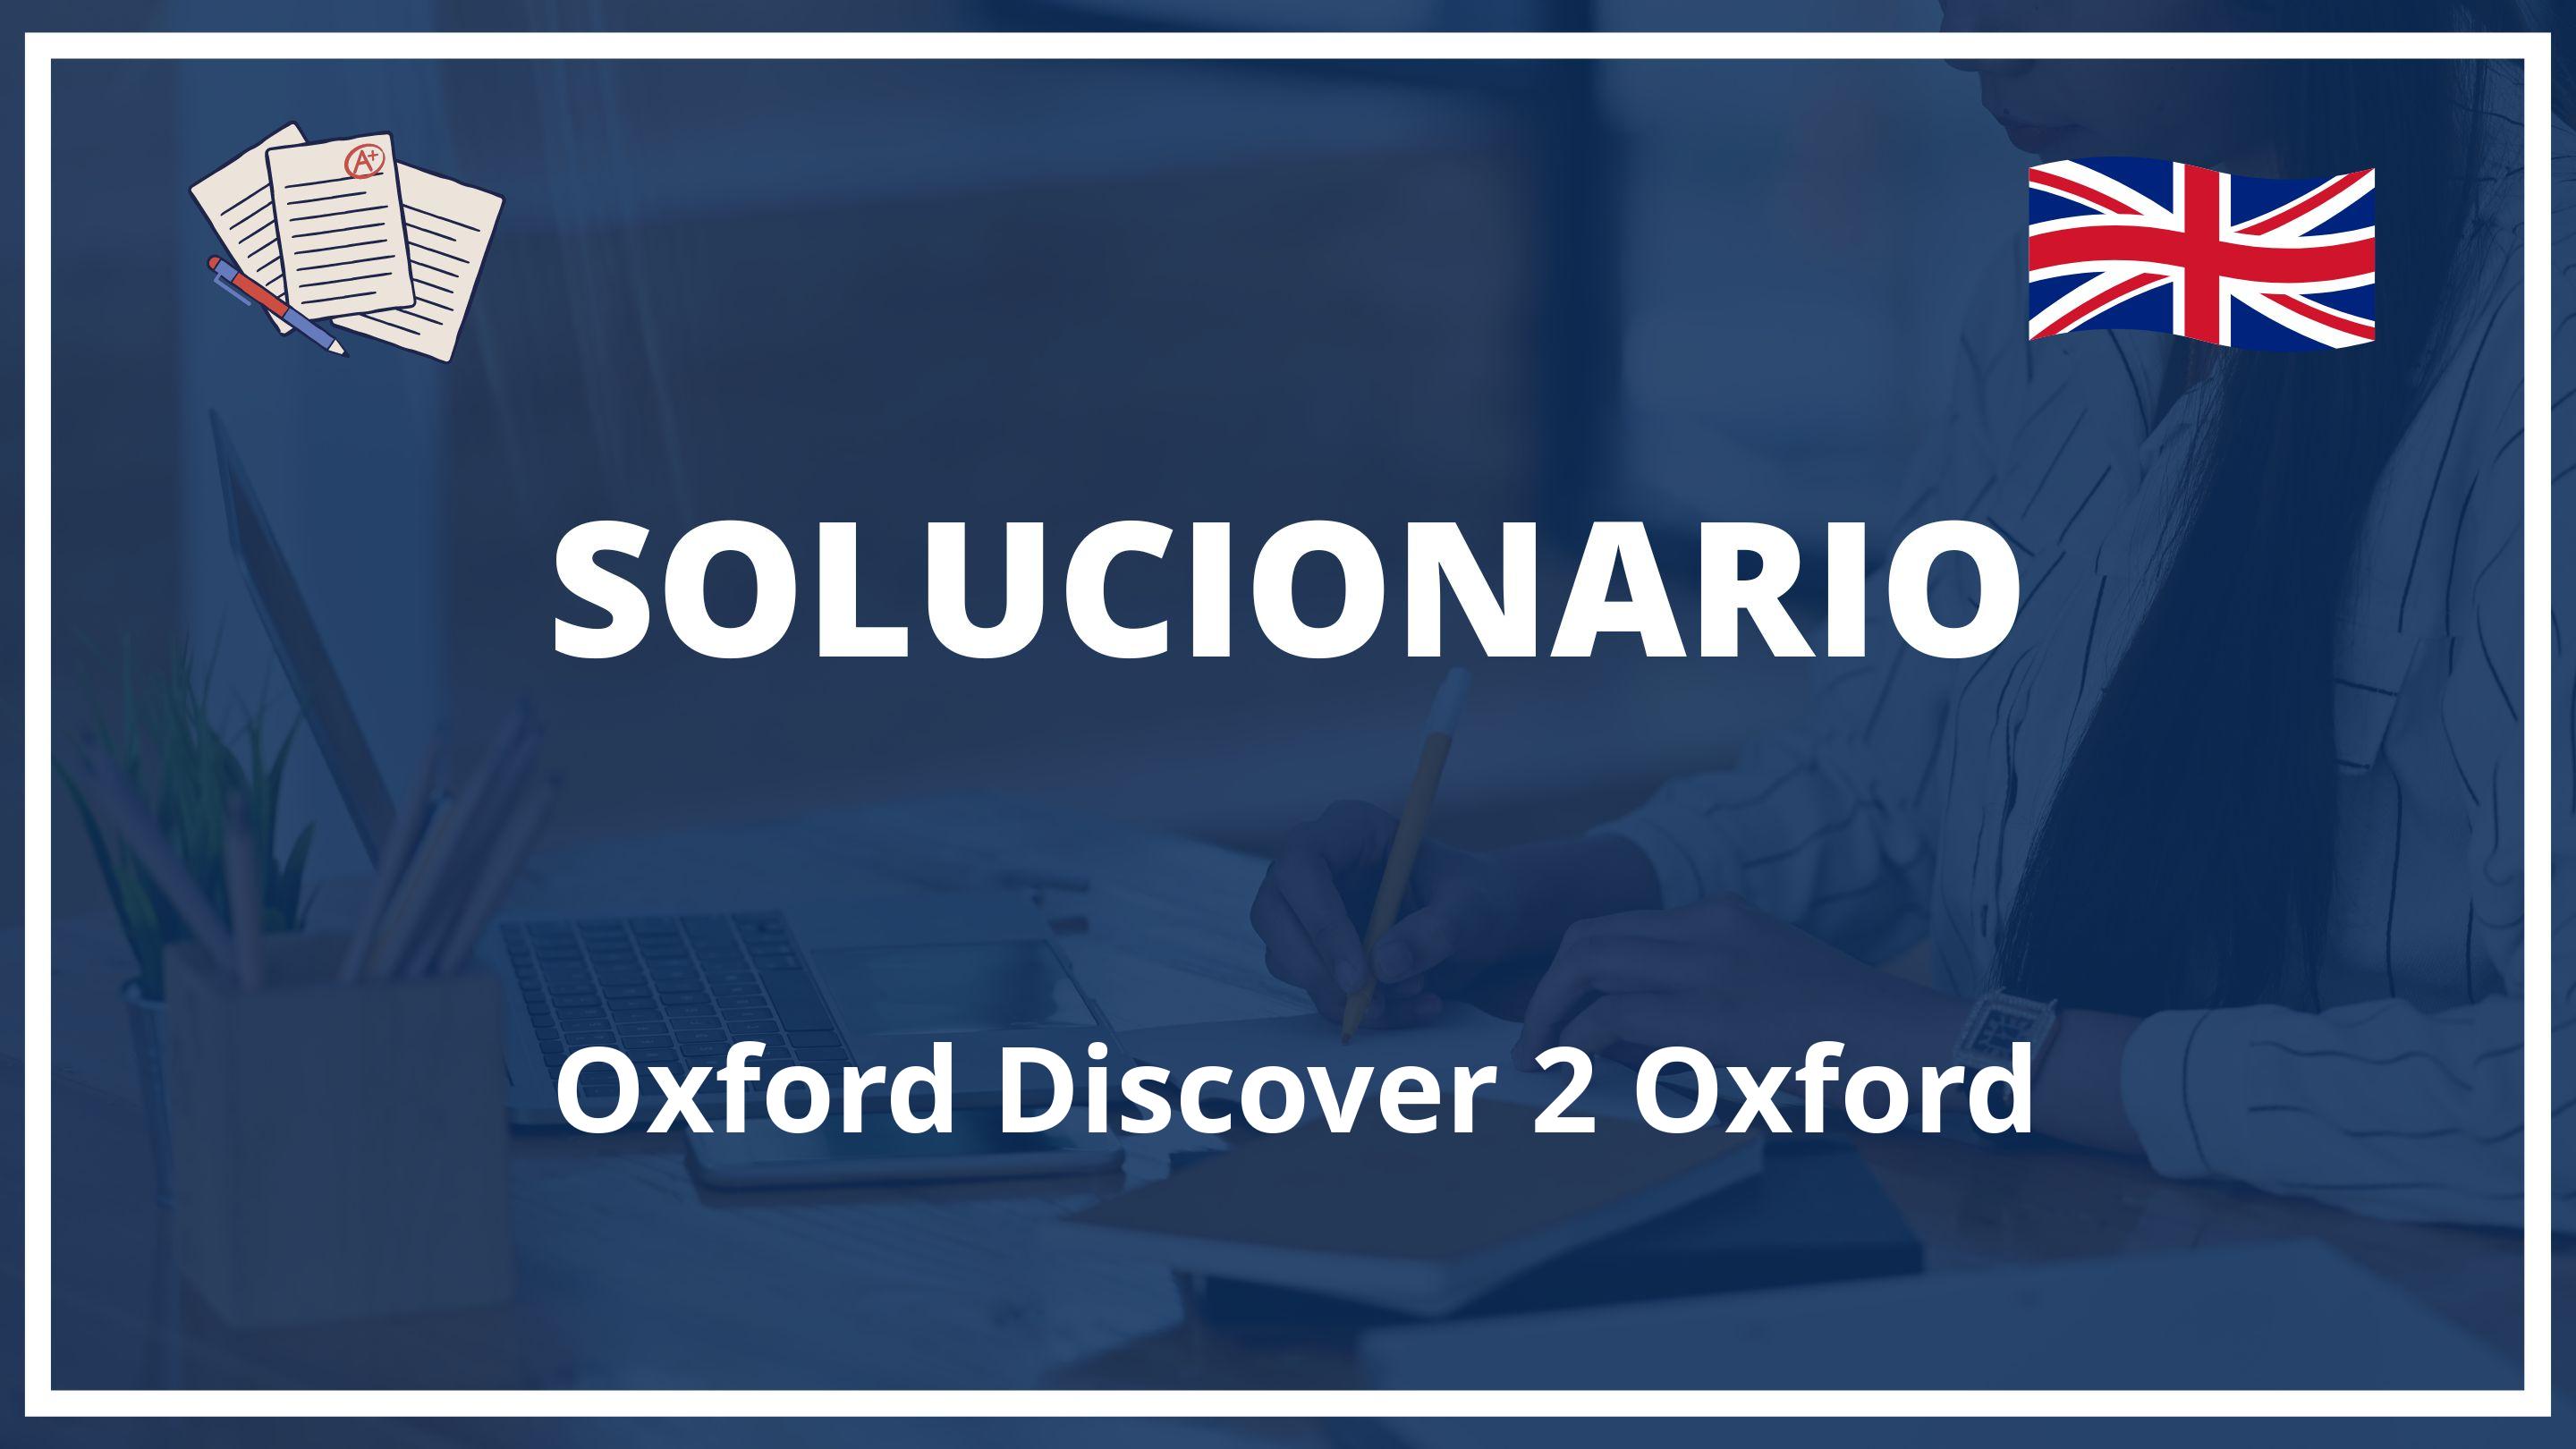 Oxford Discover 2 Oxford